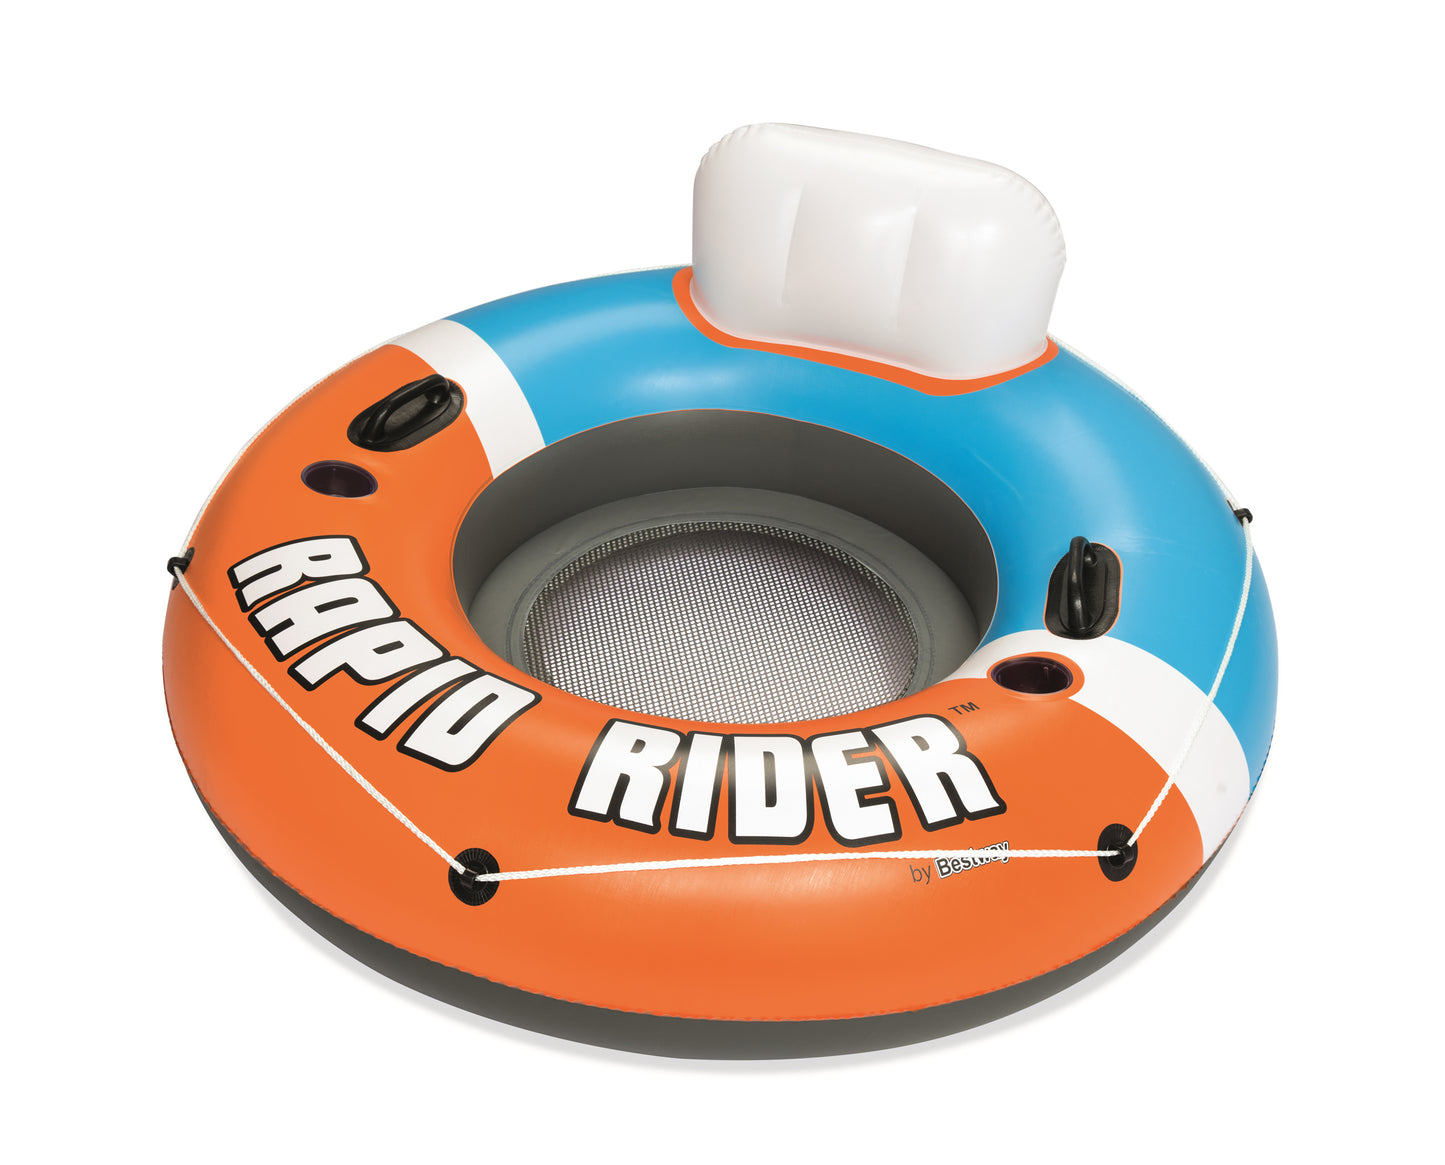 Bestway CoolerZ Rapid Rider Inflatable Blow Up Pool Chair Tube, Orange (4 Pack)